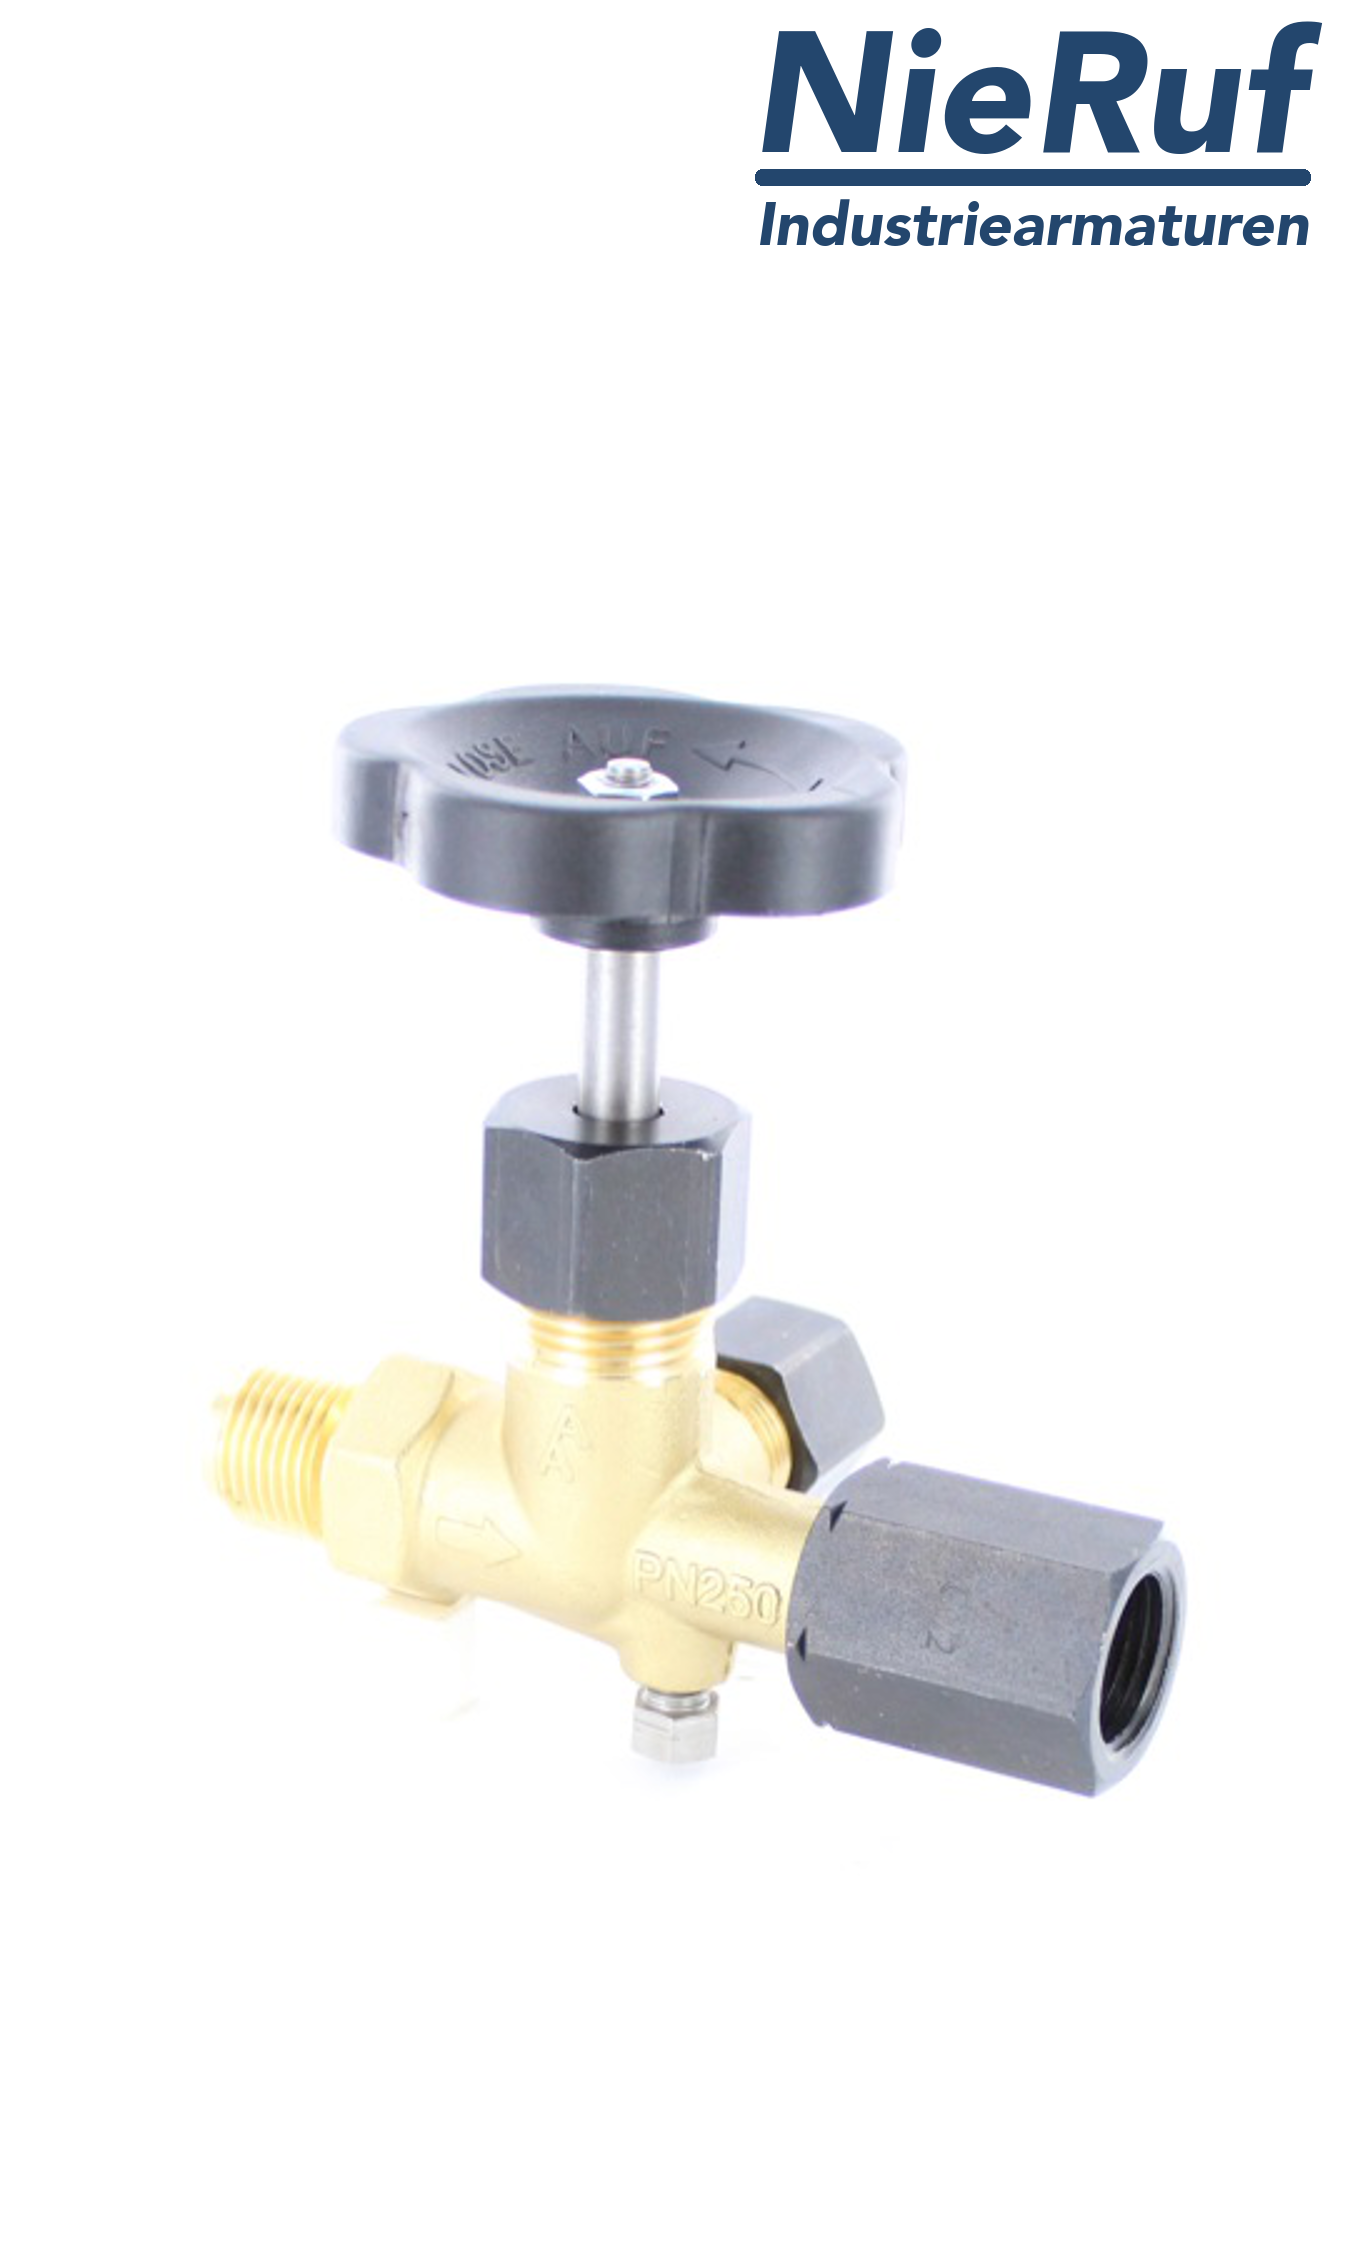 manometer gauge valves sleeve x sleeve x test connector M20x1,5 DIN 16271 brass 250 bar